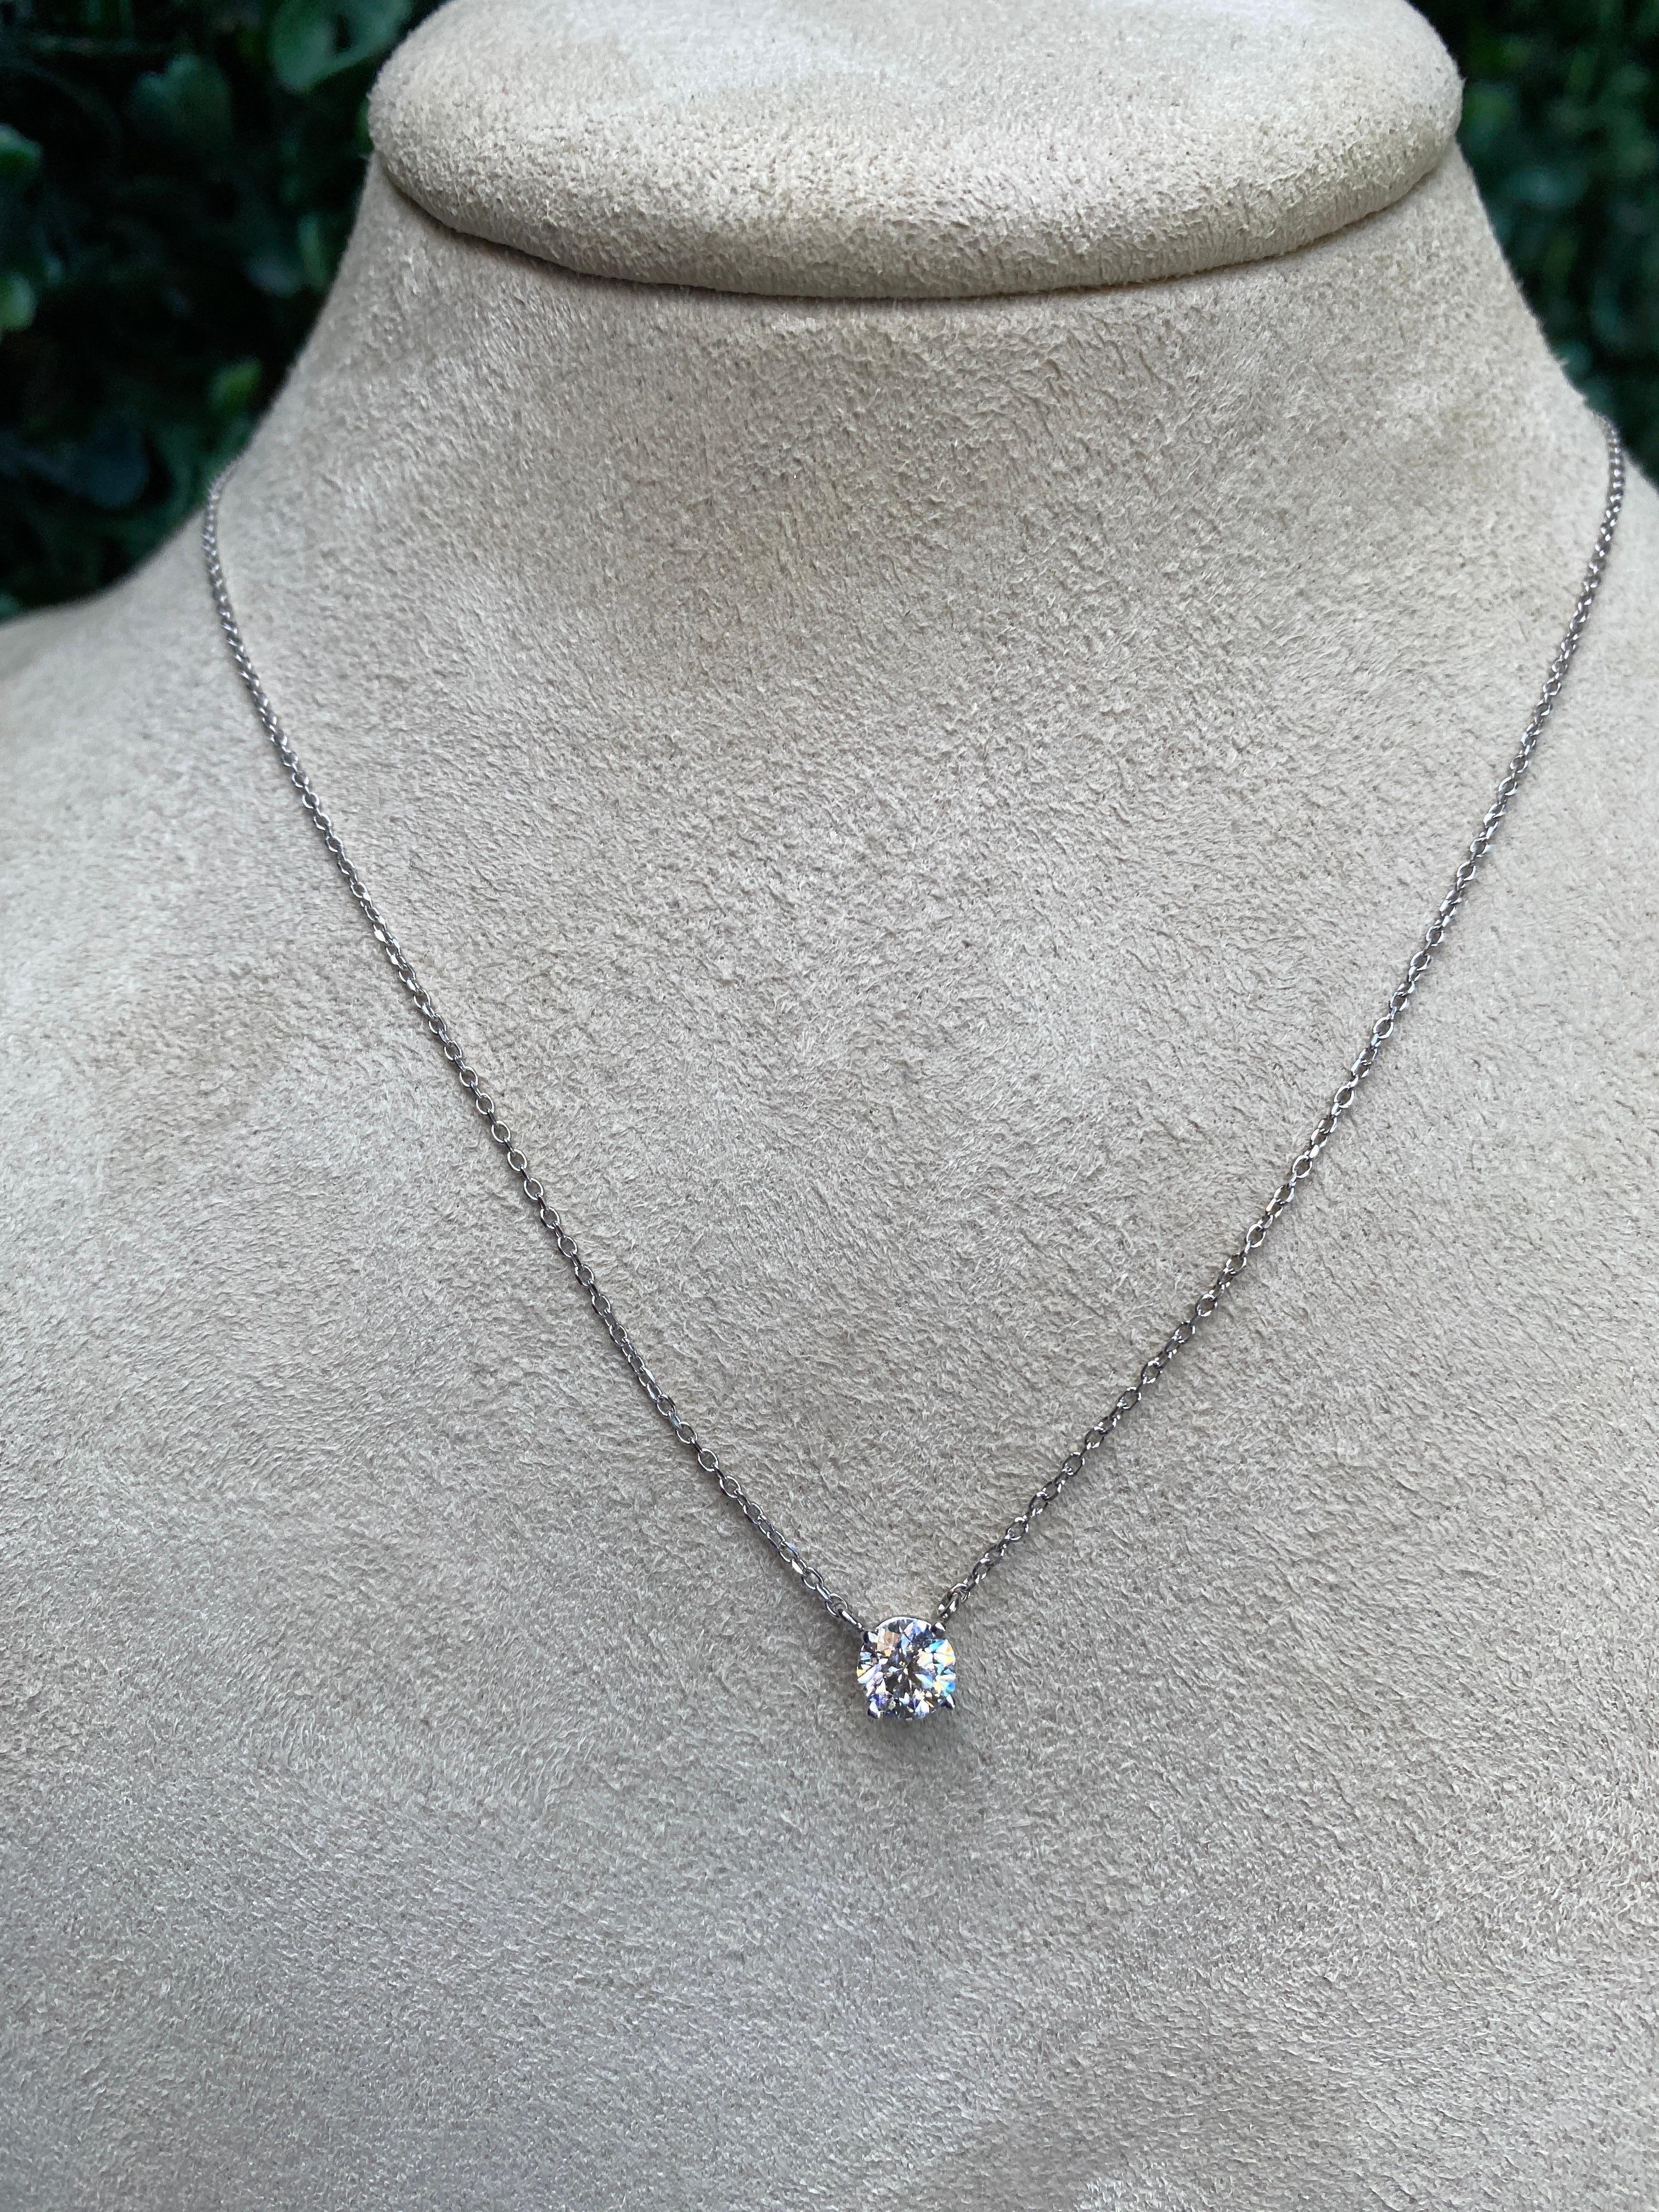 0.50 Carat Round Natural Diamond, H-I SI2, 14 Karat White Gold Pendant Necklace For Sale 4